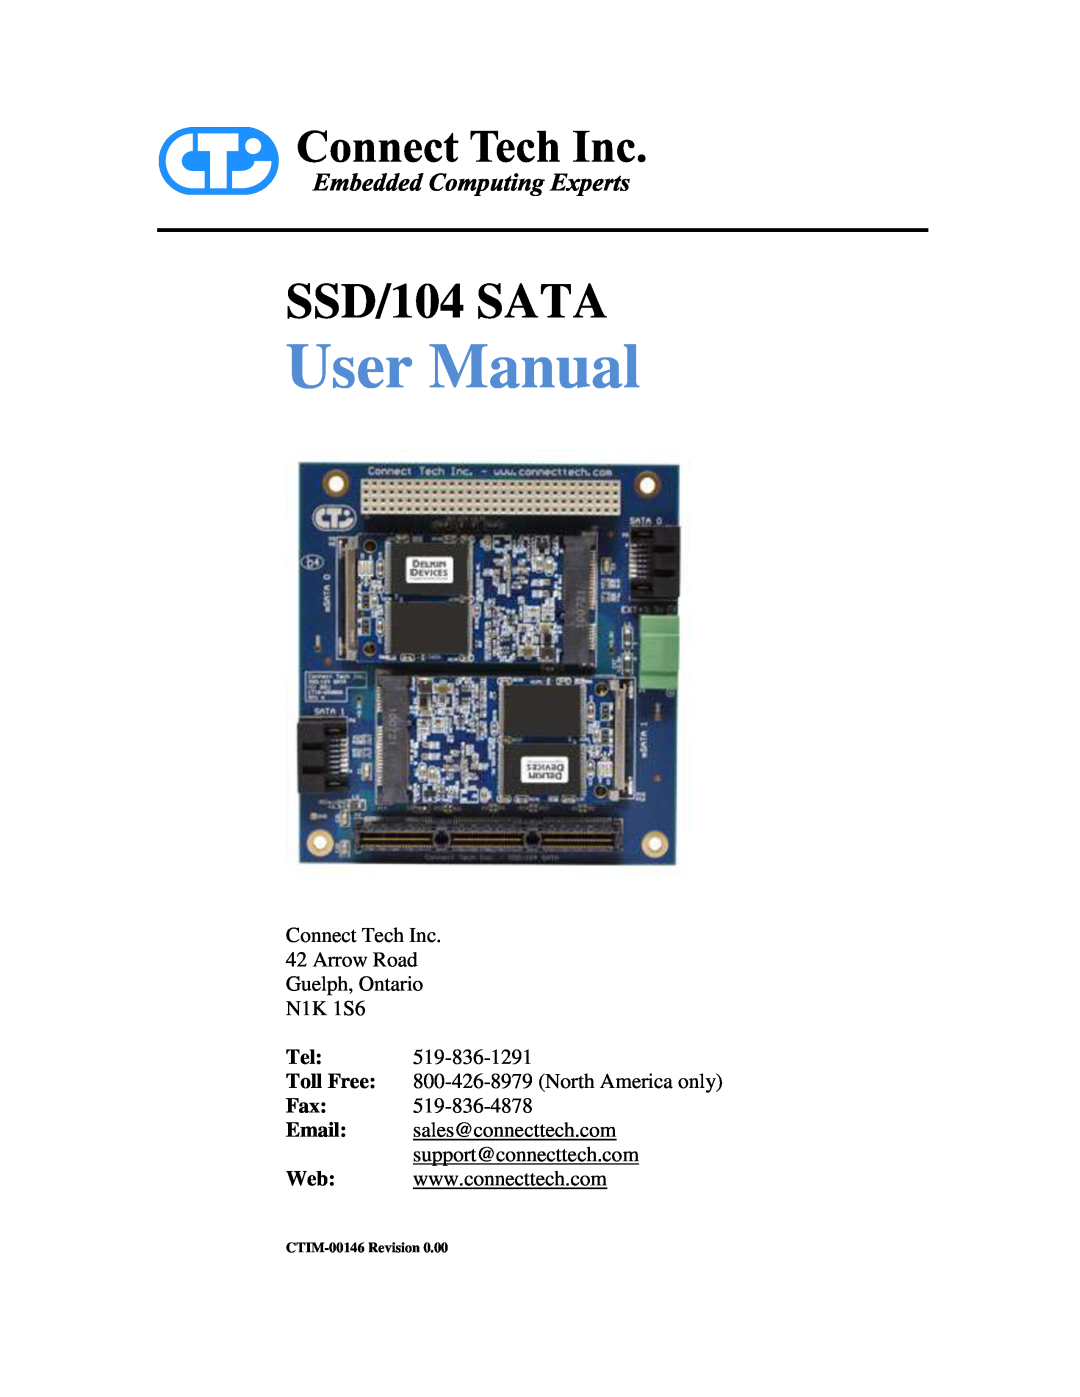 Connect Tech user manual User Manual, SSD/104 SATA, Connect Tech Inc 42 Arrow Road Guelph, Ontario N1K 1S6 